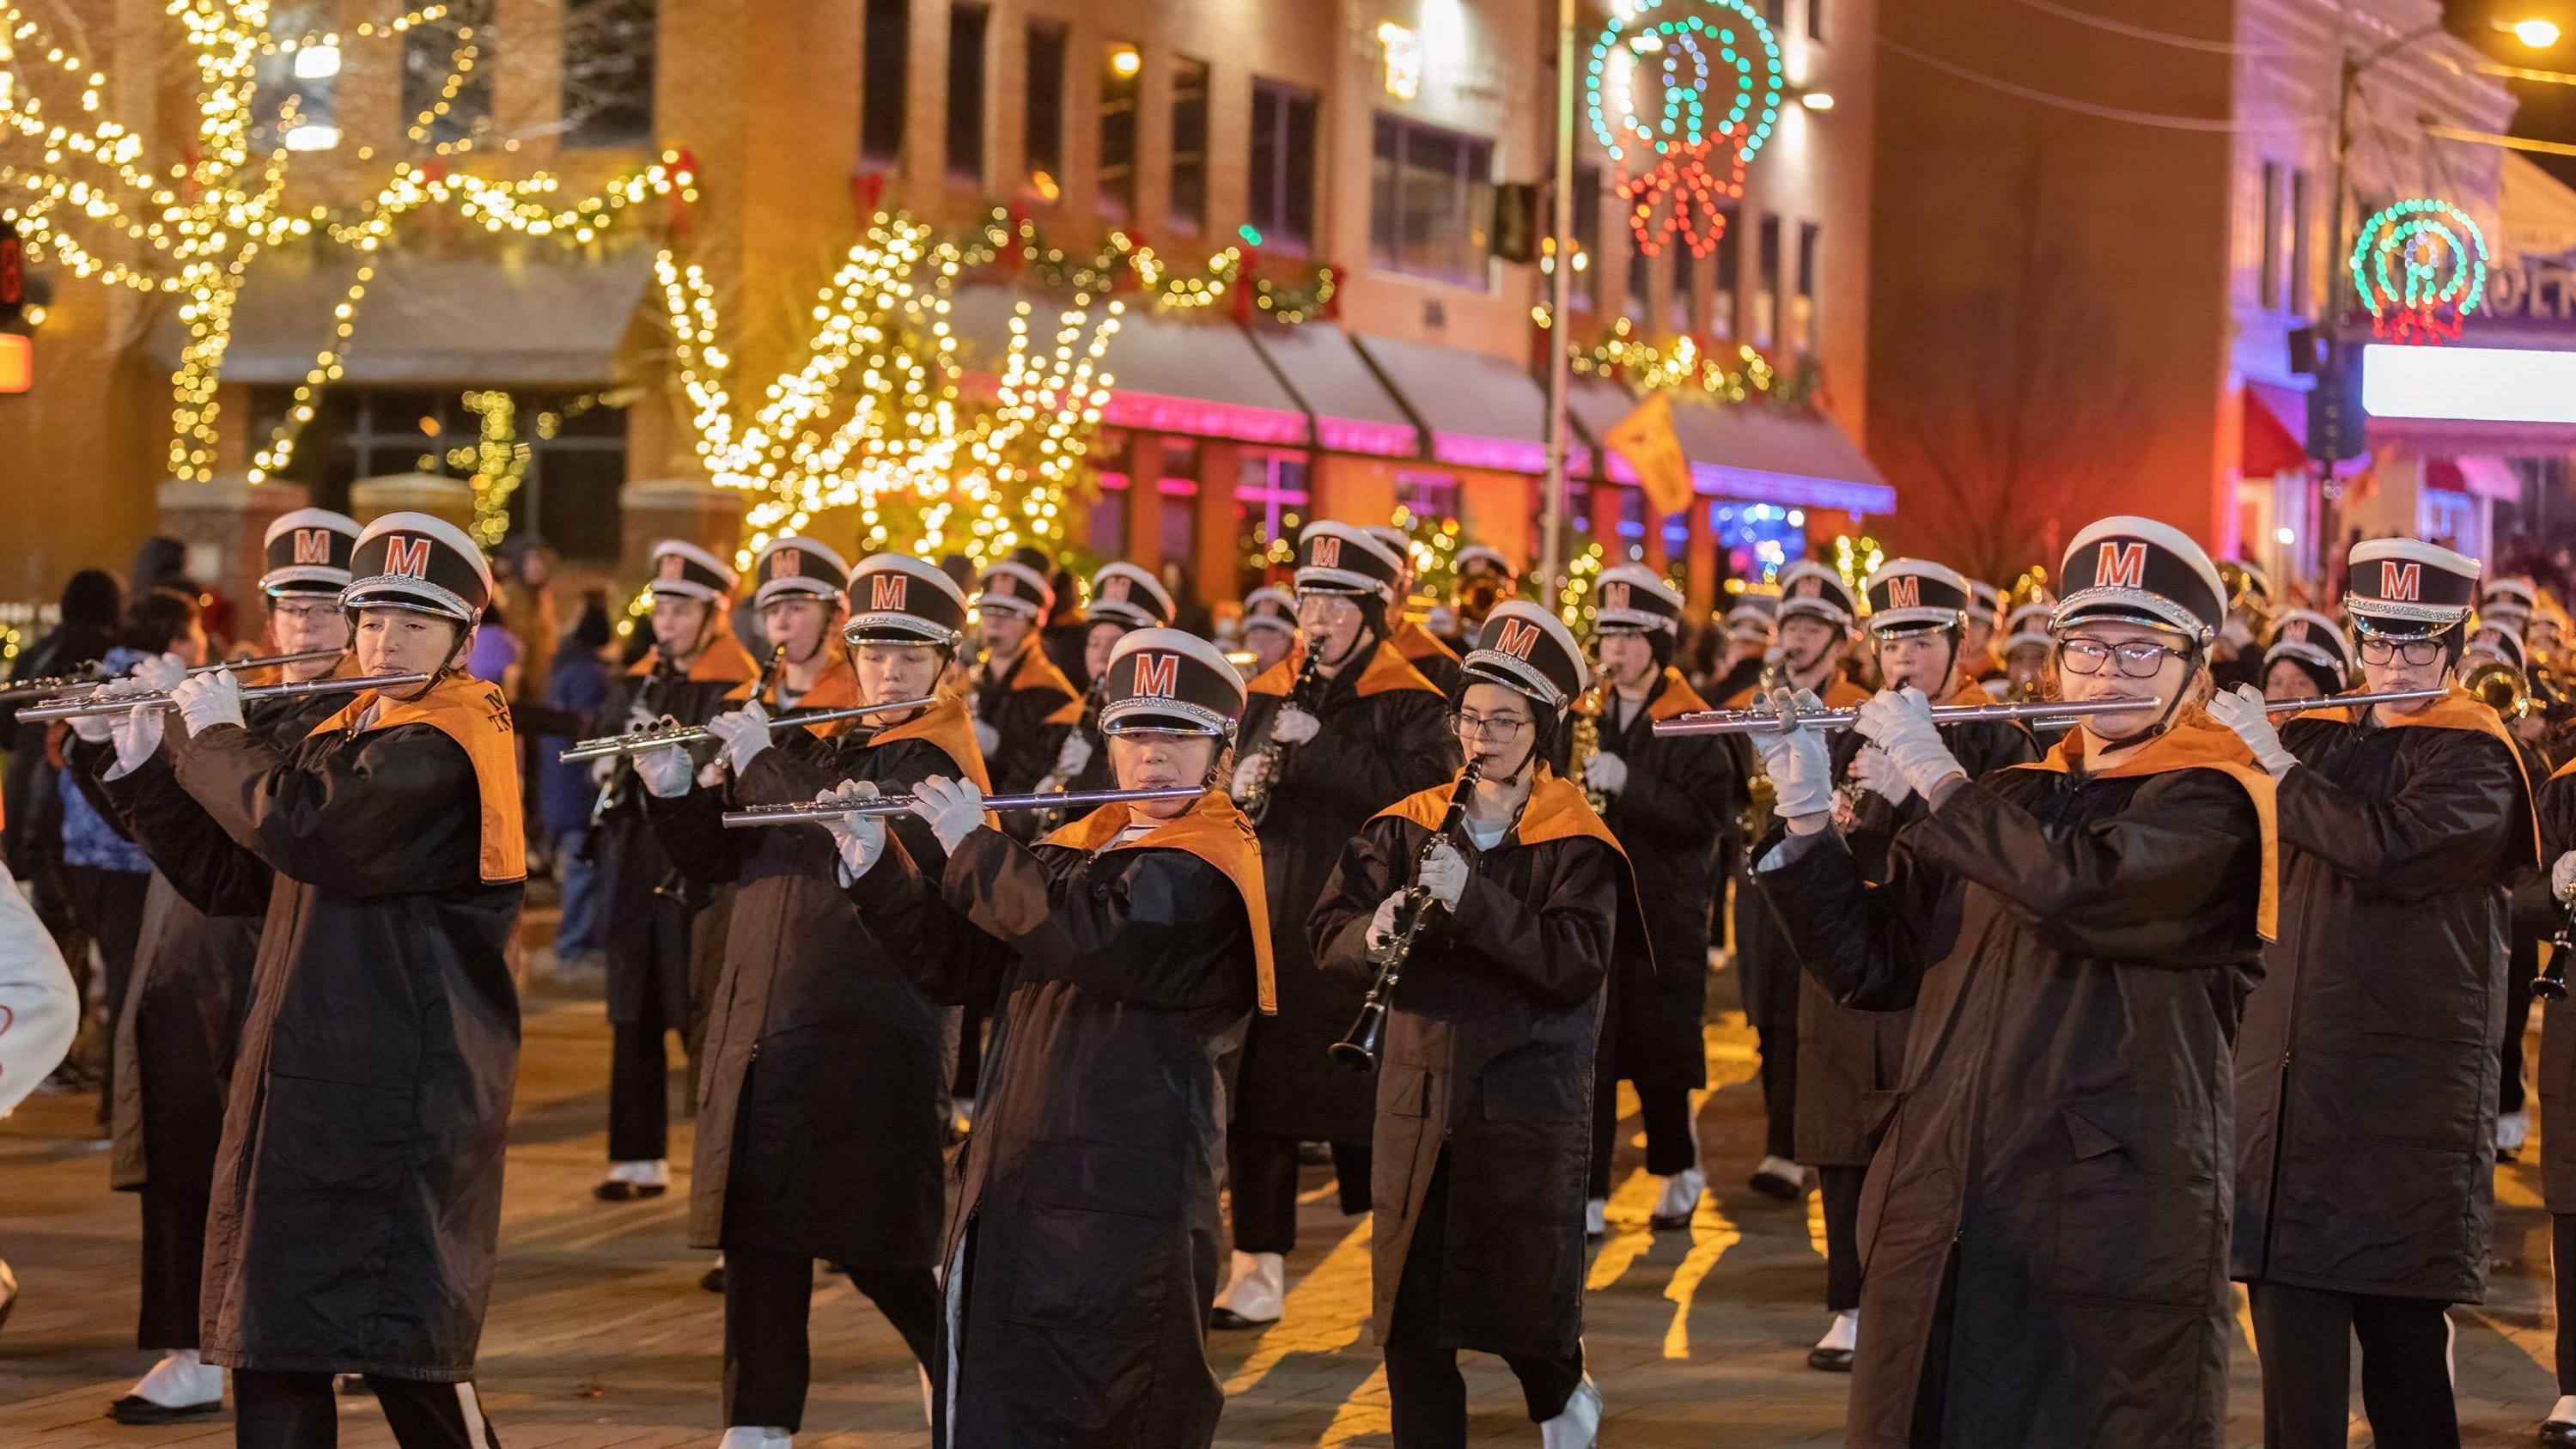 Massillon kicks off holiday season with Christmas parade